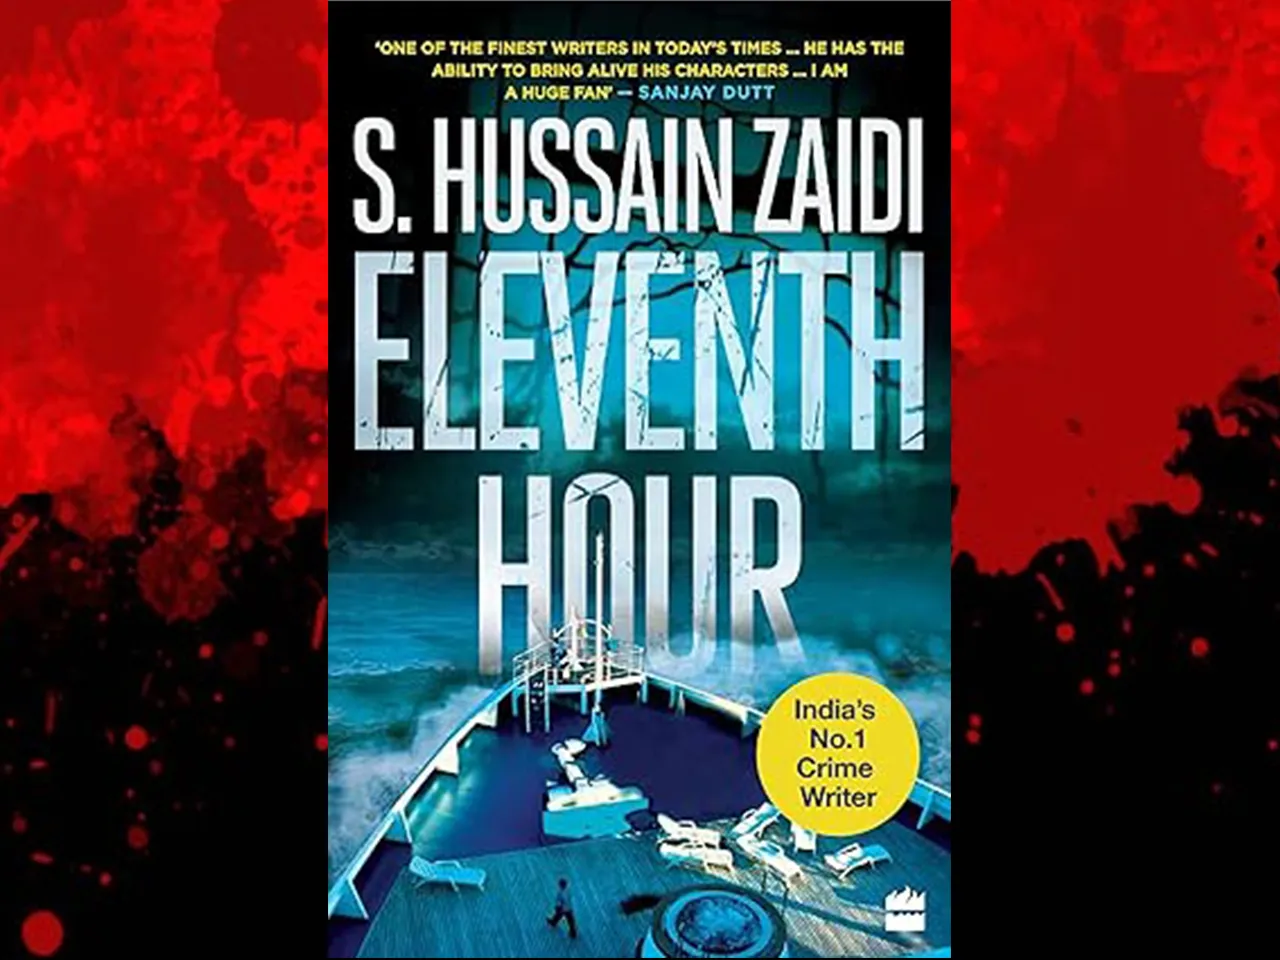 eleventh hour by hussain zaidi